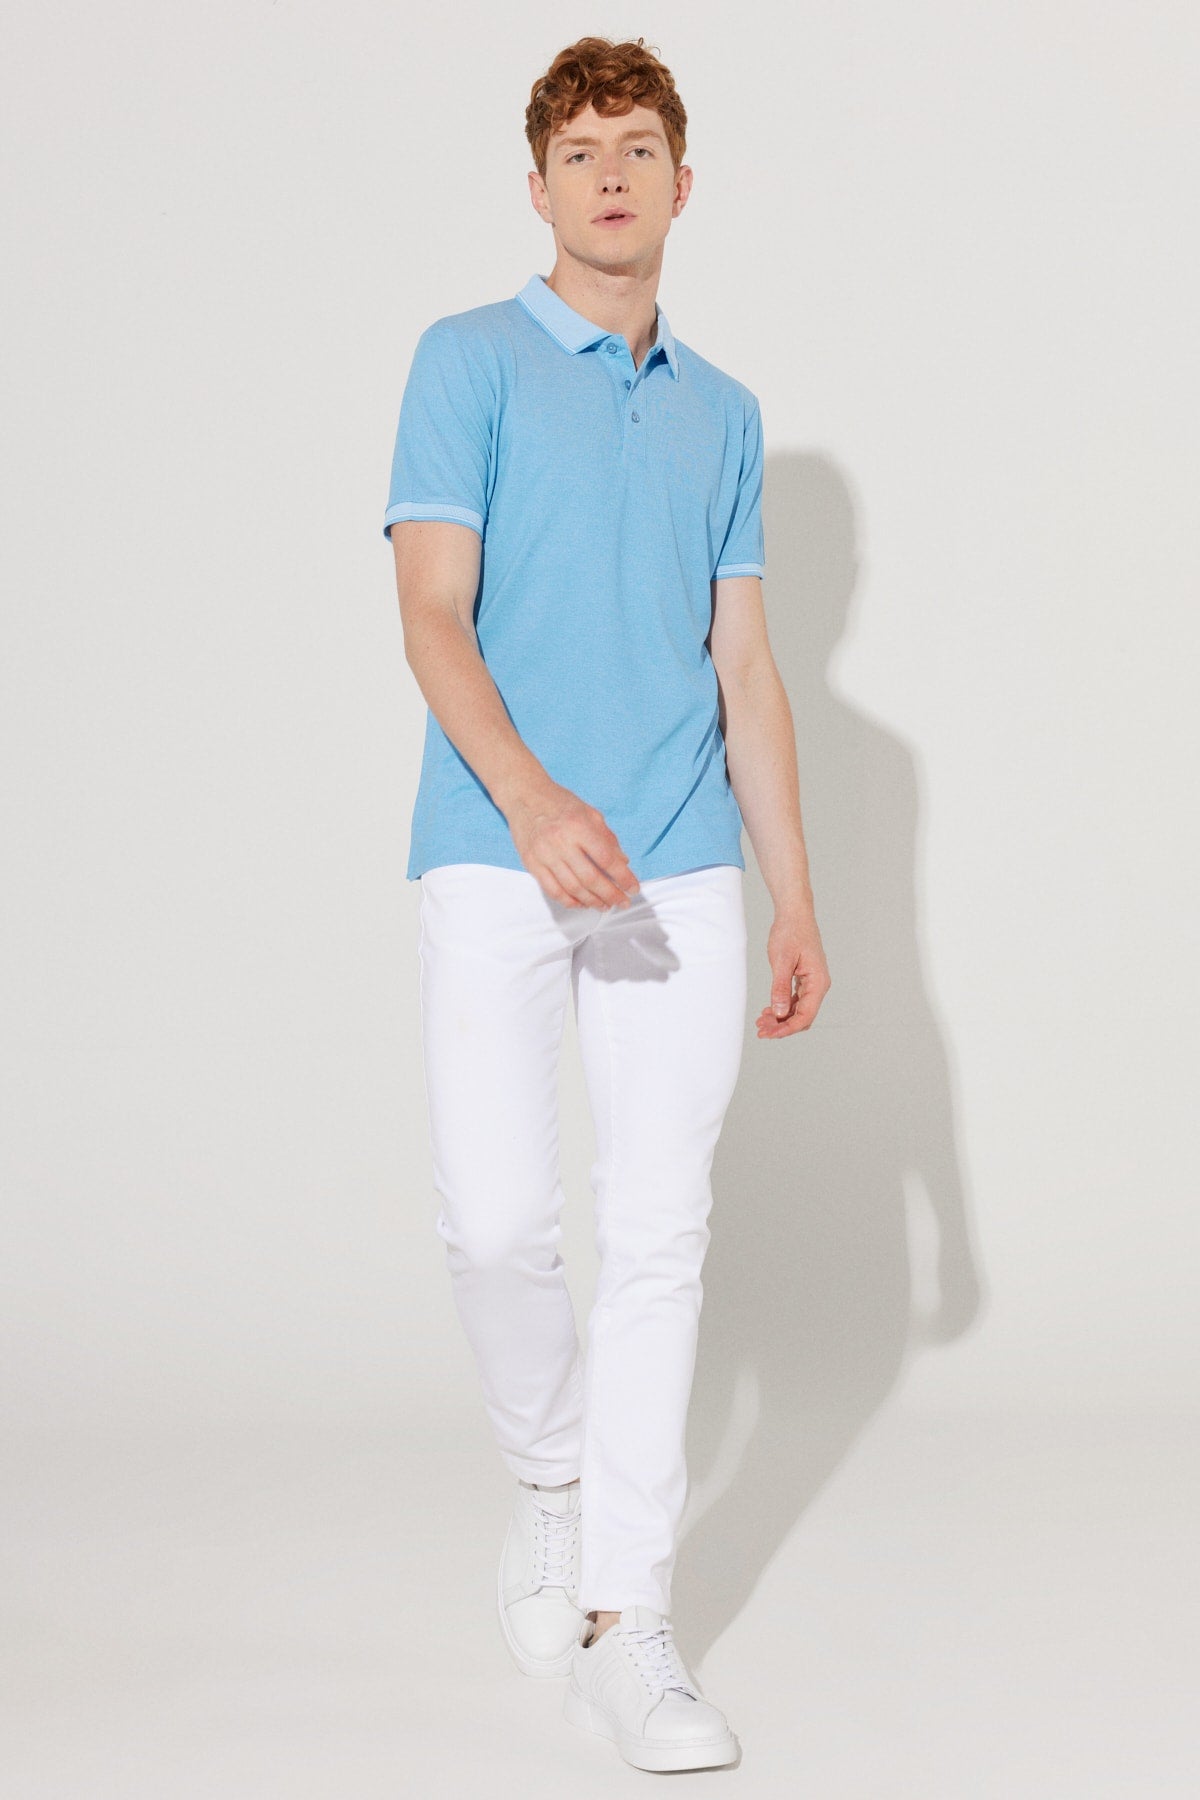 Men's Non-Shrink Cotton Fabric Slim Fit Slim Fit Sax-White Anti-roll Polo Neck T-Shirt